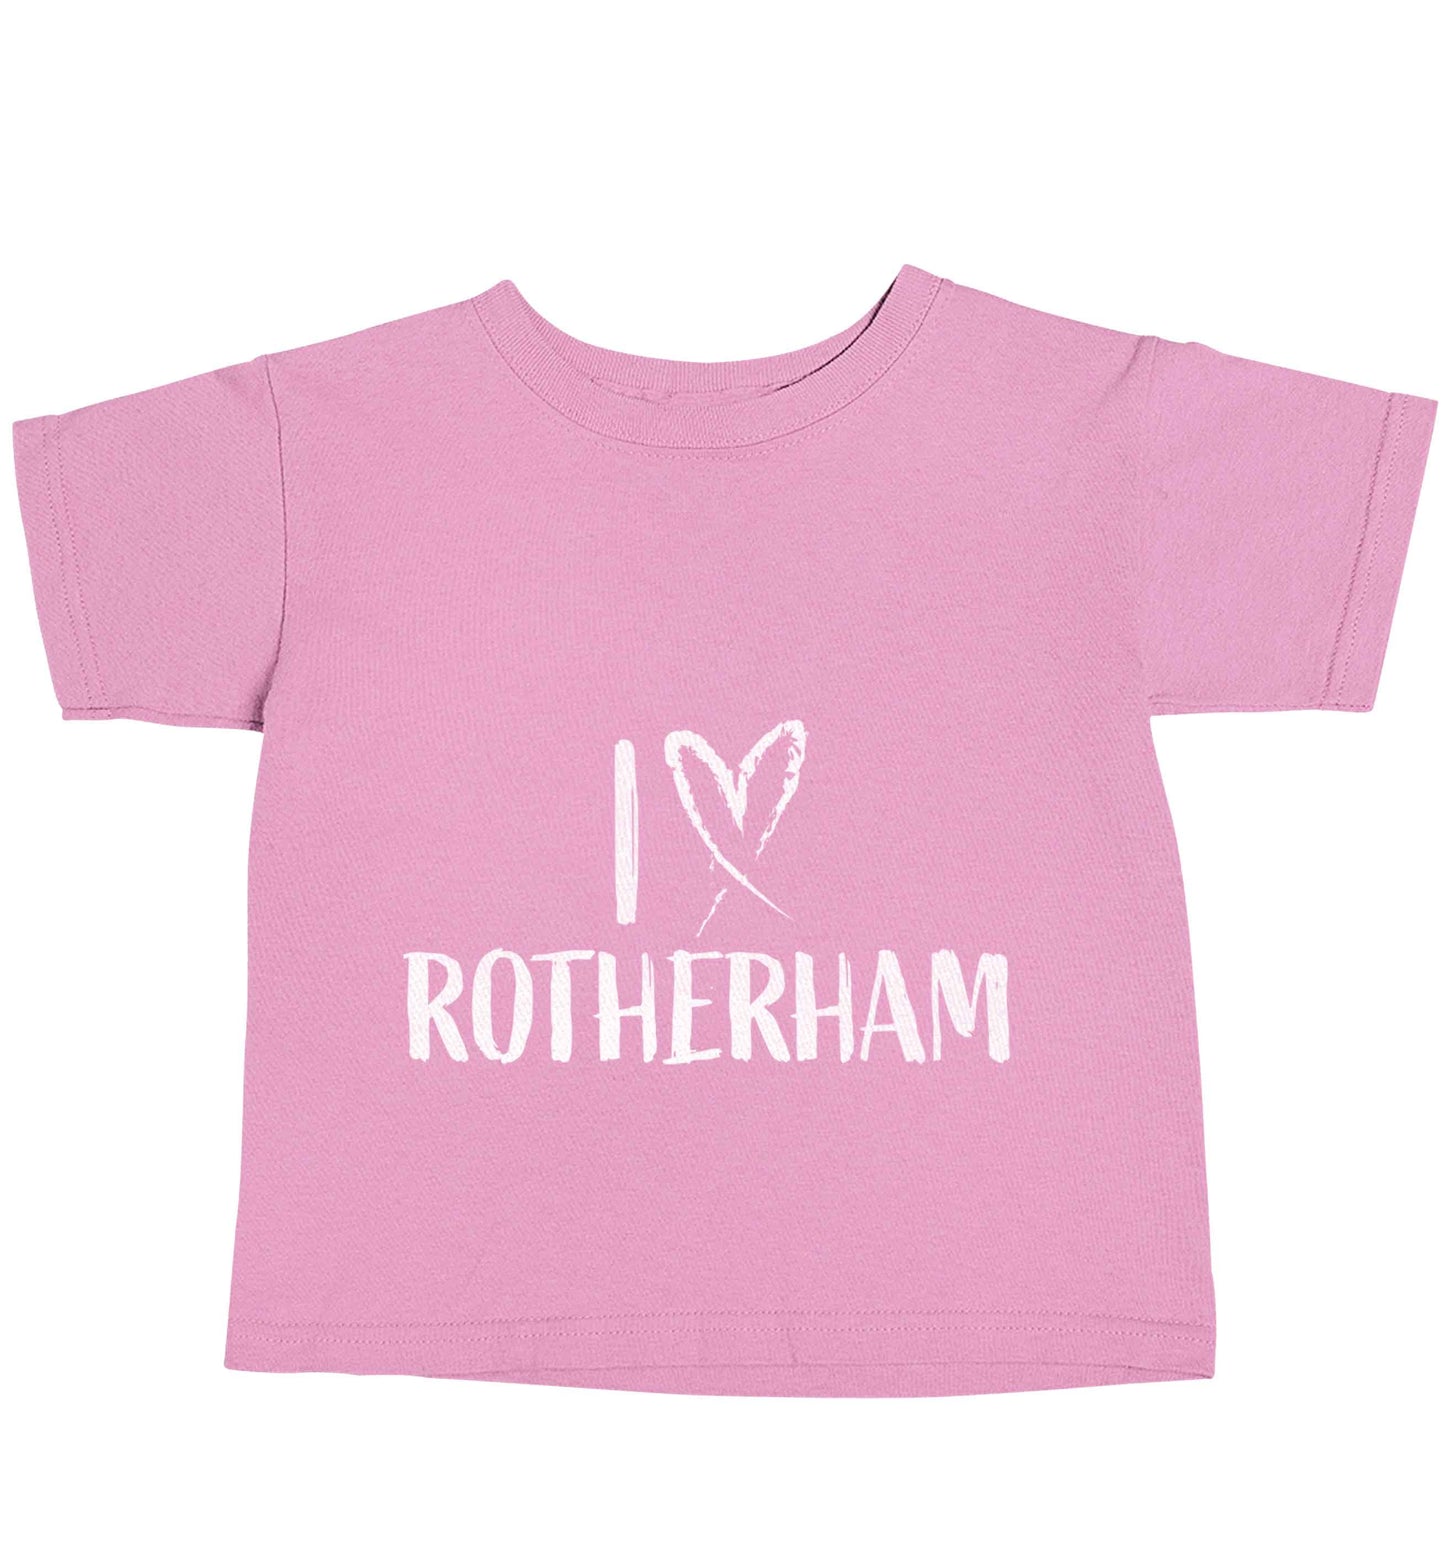 I love Rotherham light pink baby toddler Tshirt 2 Years